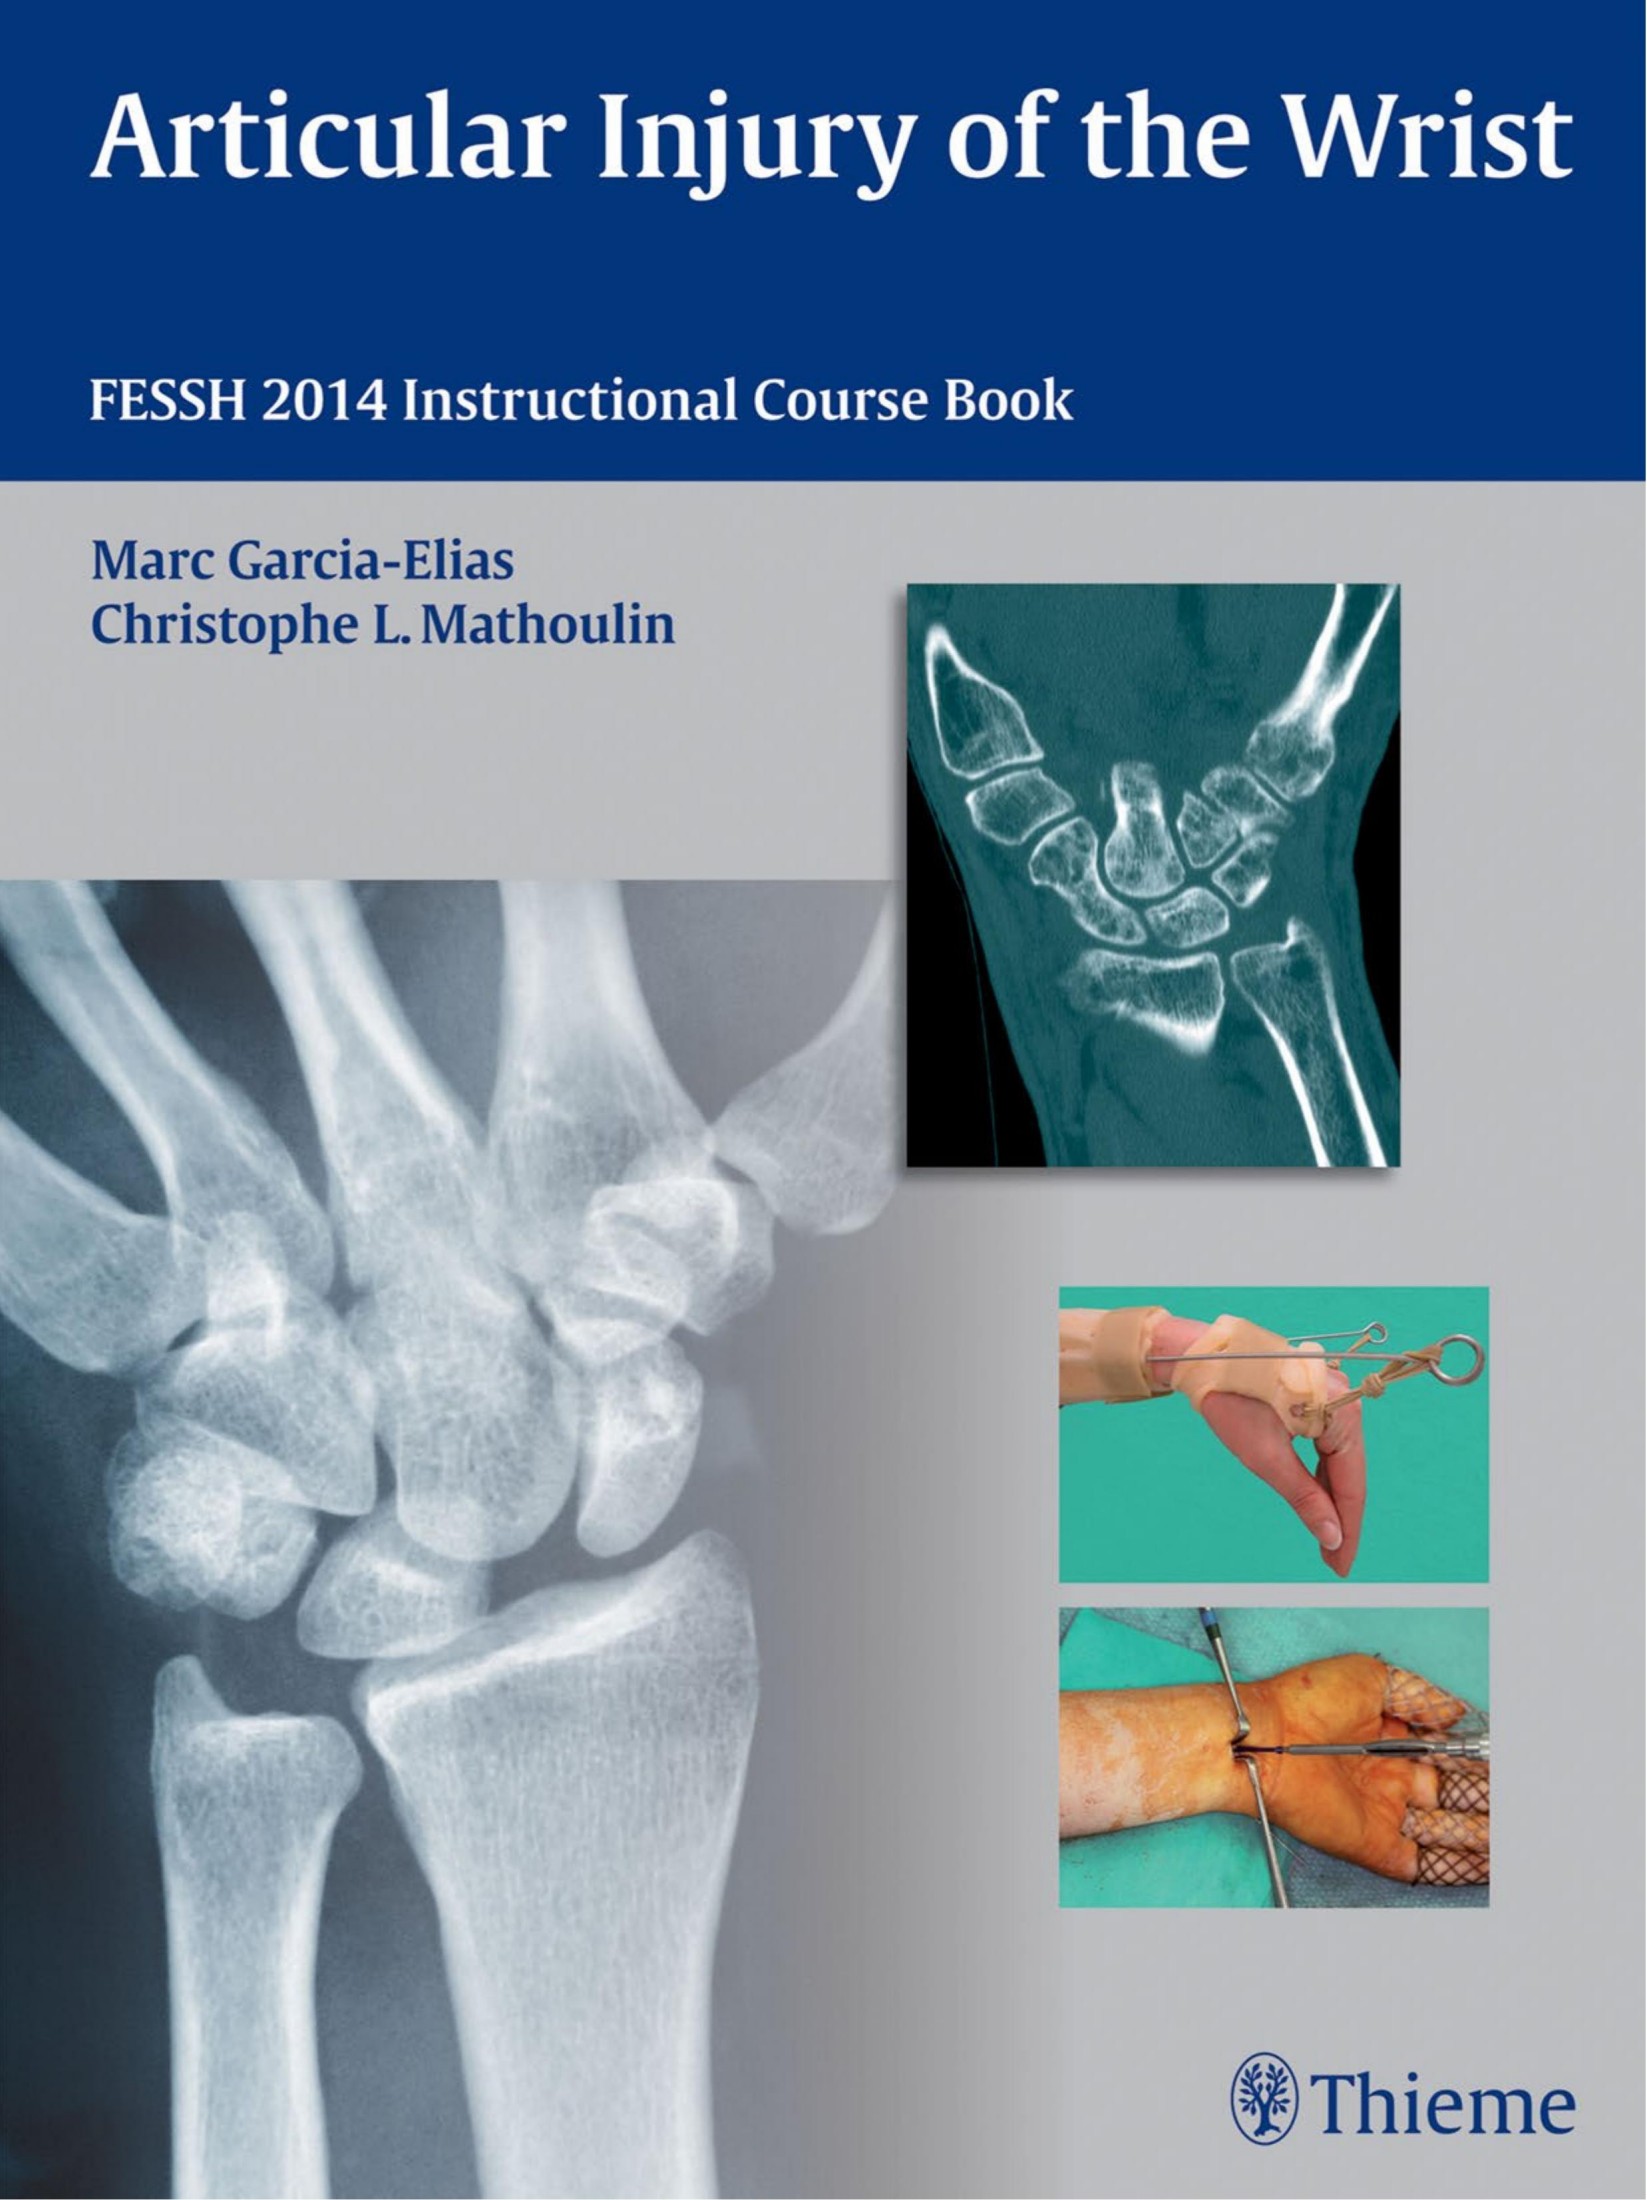 Articular Injury of the Wrist-FESSH 2014 Instructional Course Book, 1E (2014) - Wei Zhi.jpg